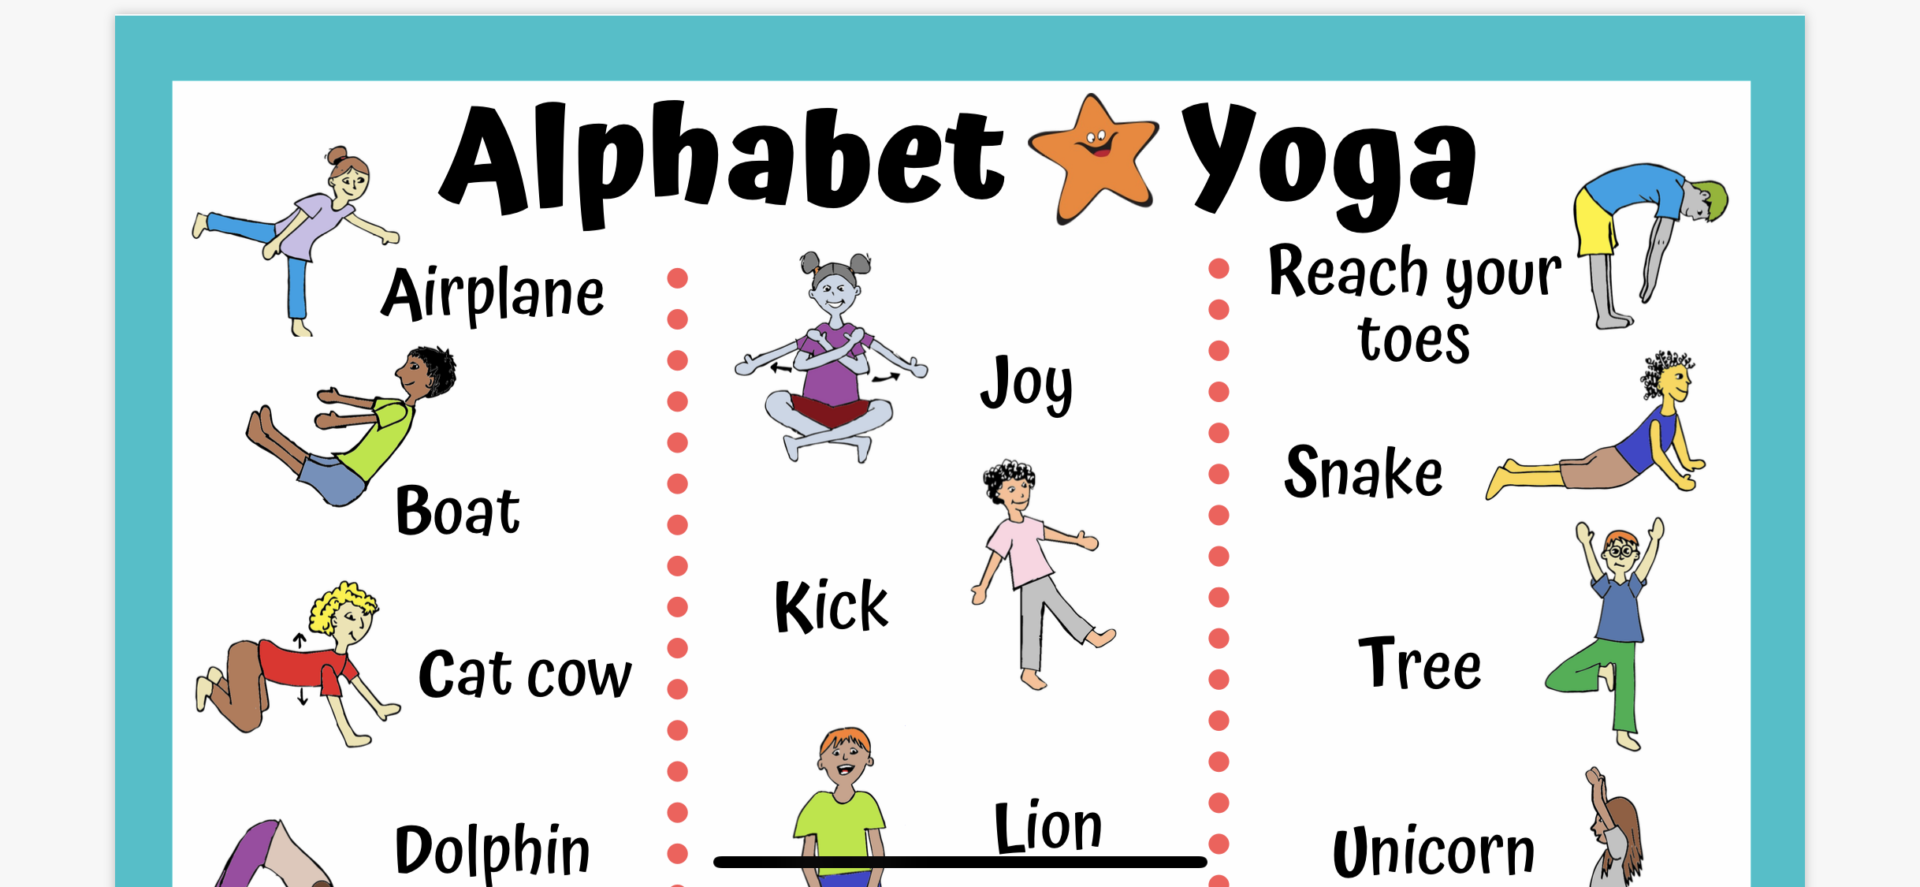 Kids' Yoga Books, Mindfulness Books - The ABCs of Yoga for Kids